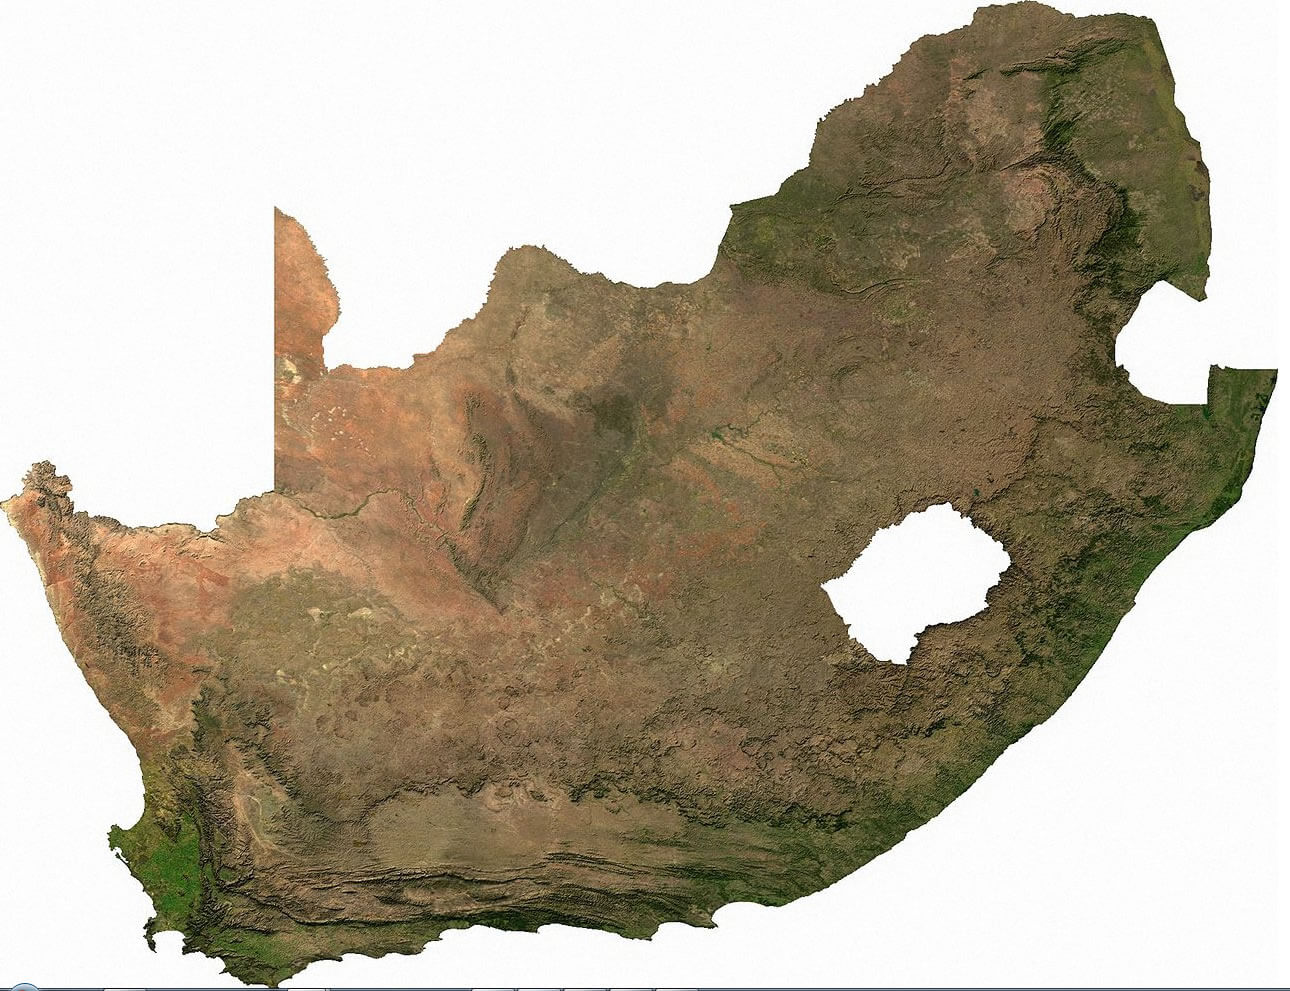 south africa satellite image